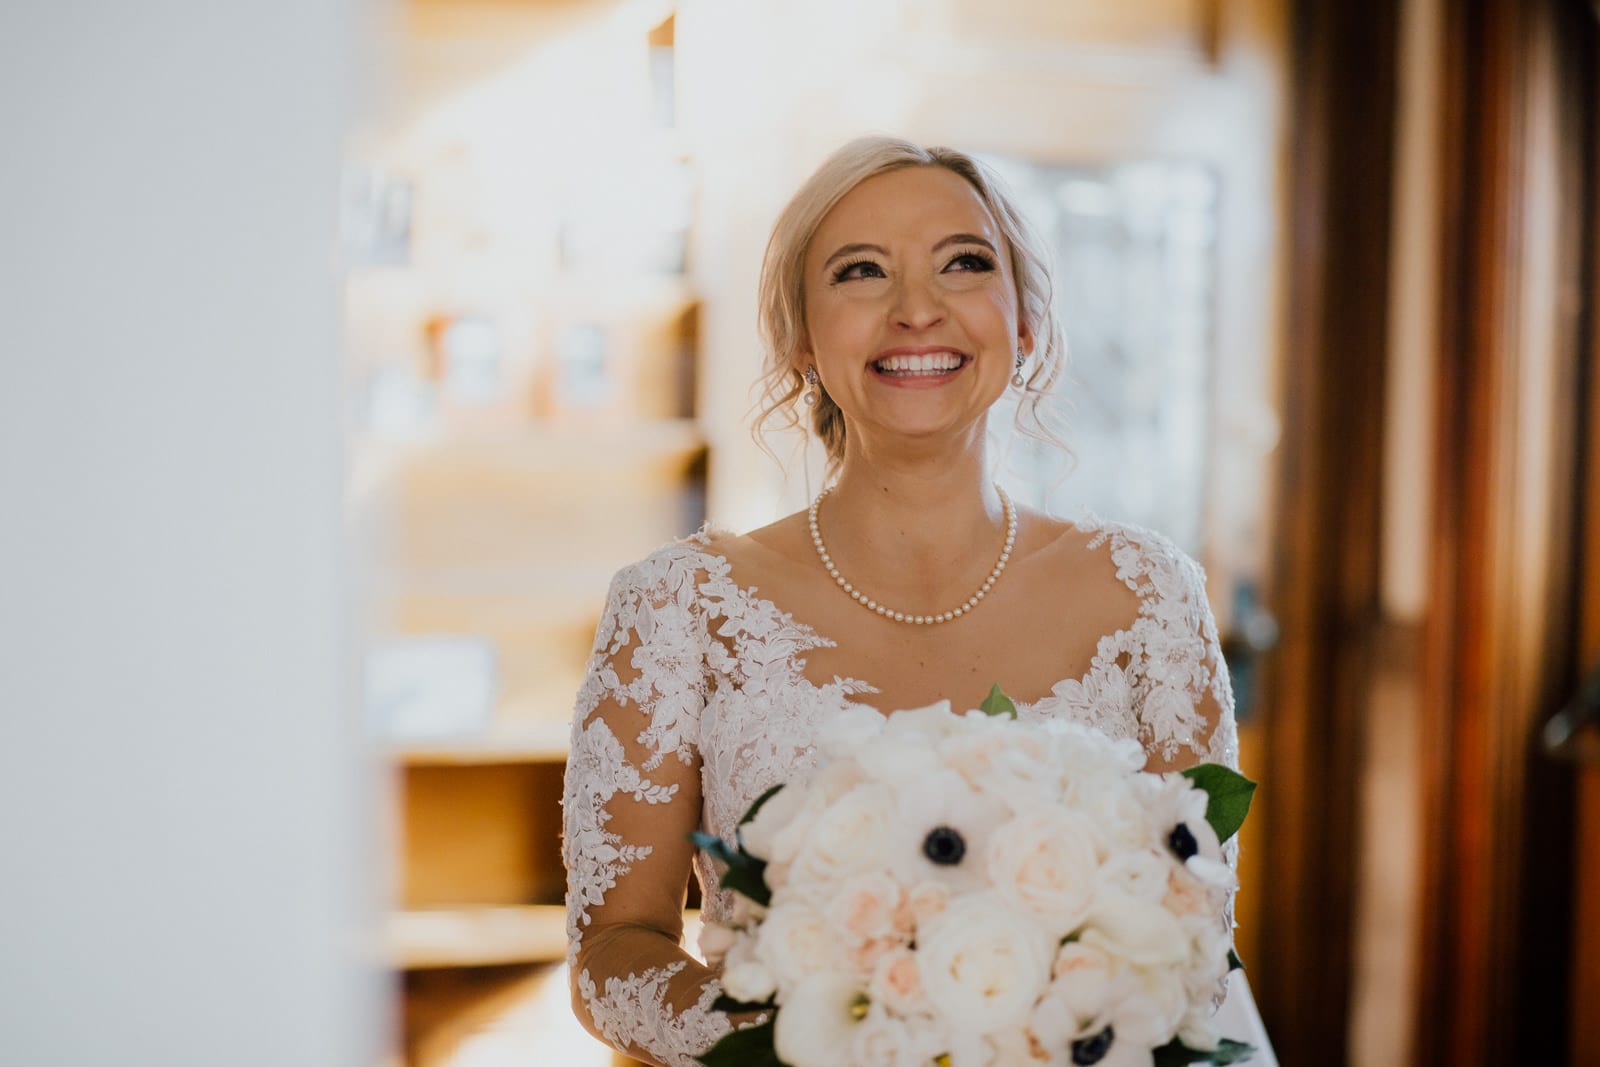 Bride smiles as she prepares to walk down the aisle